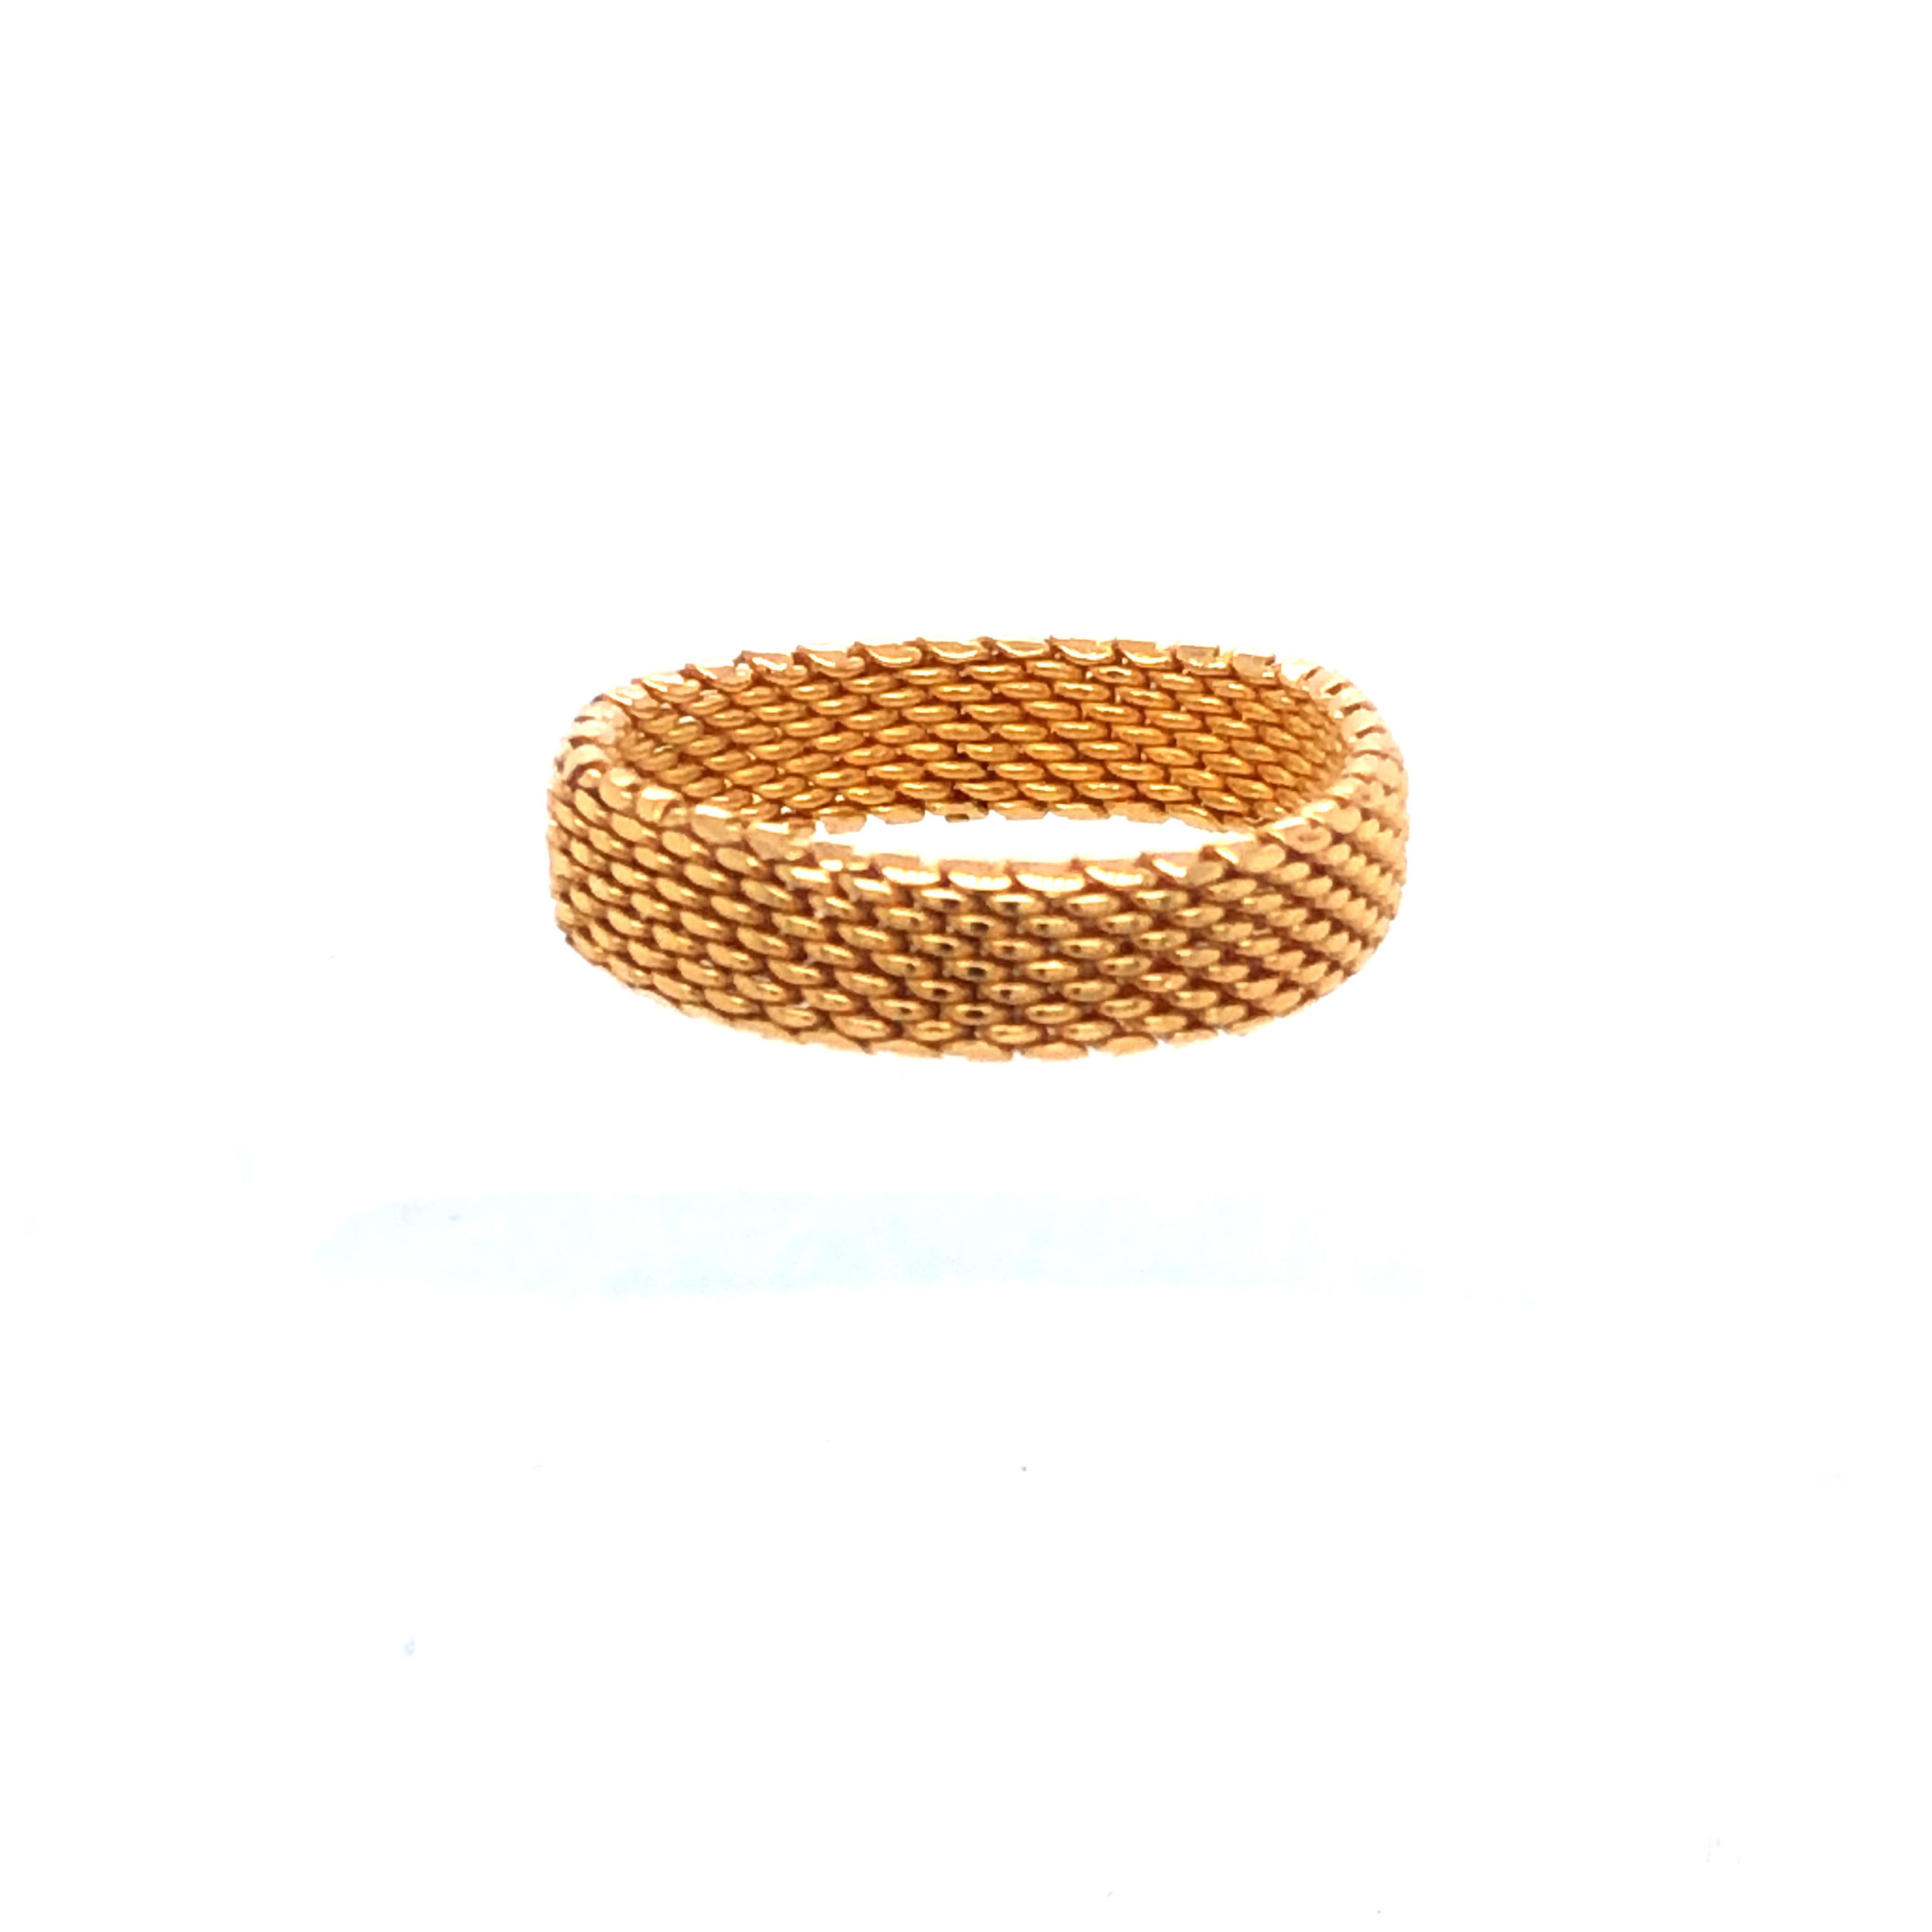 18K Yellow Gold Flexible Super Comfortable Mesh Ring Size 6.25